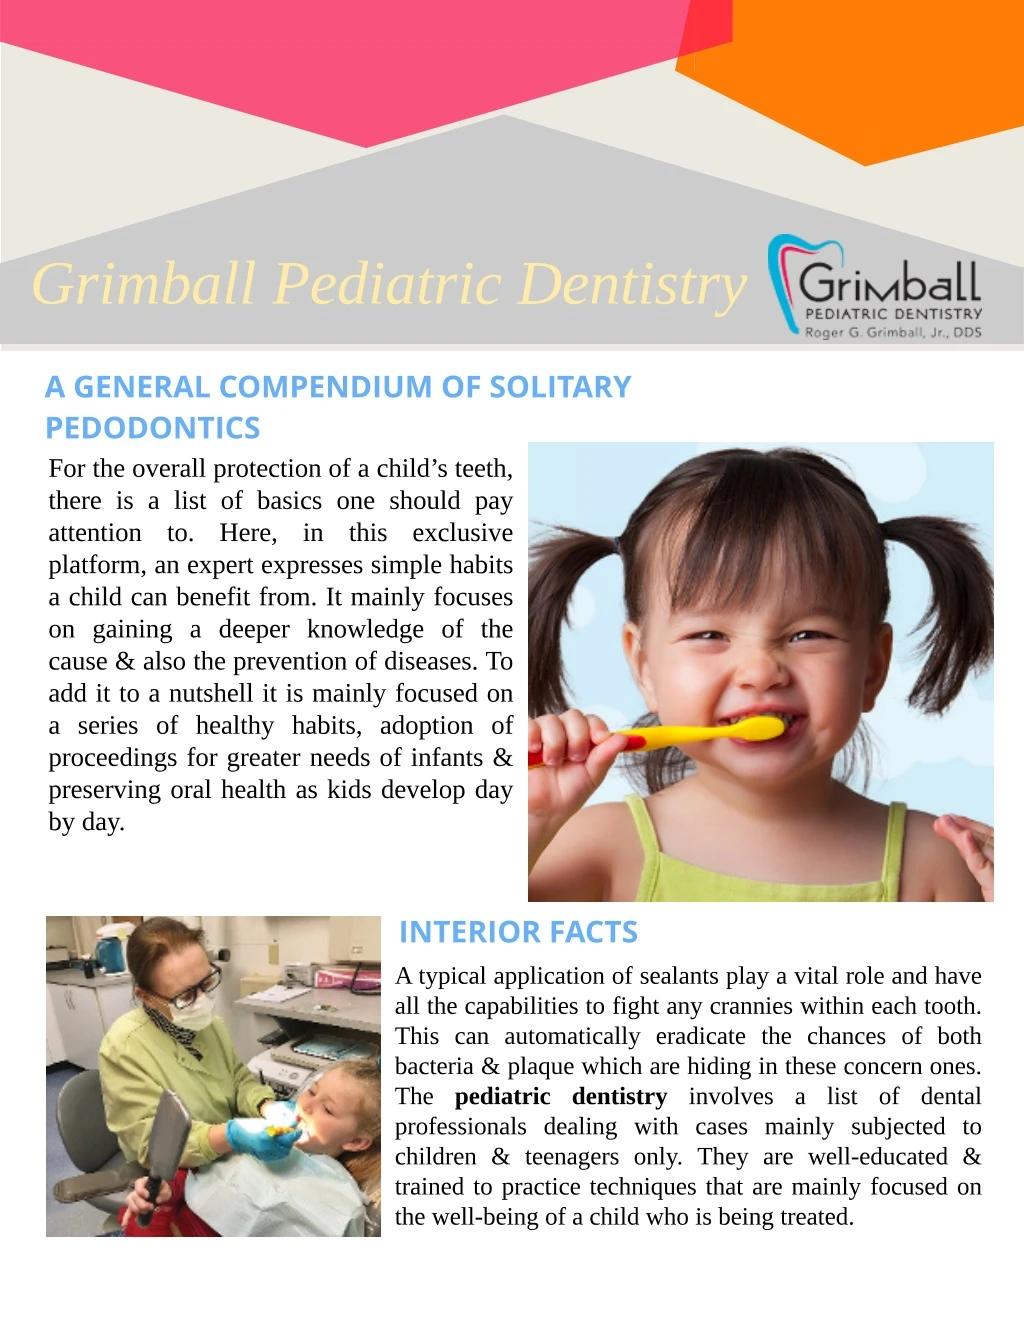 grimball pediatric dentistry